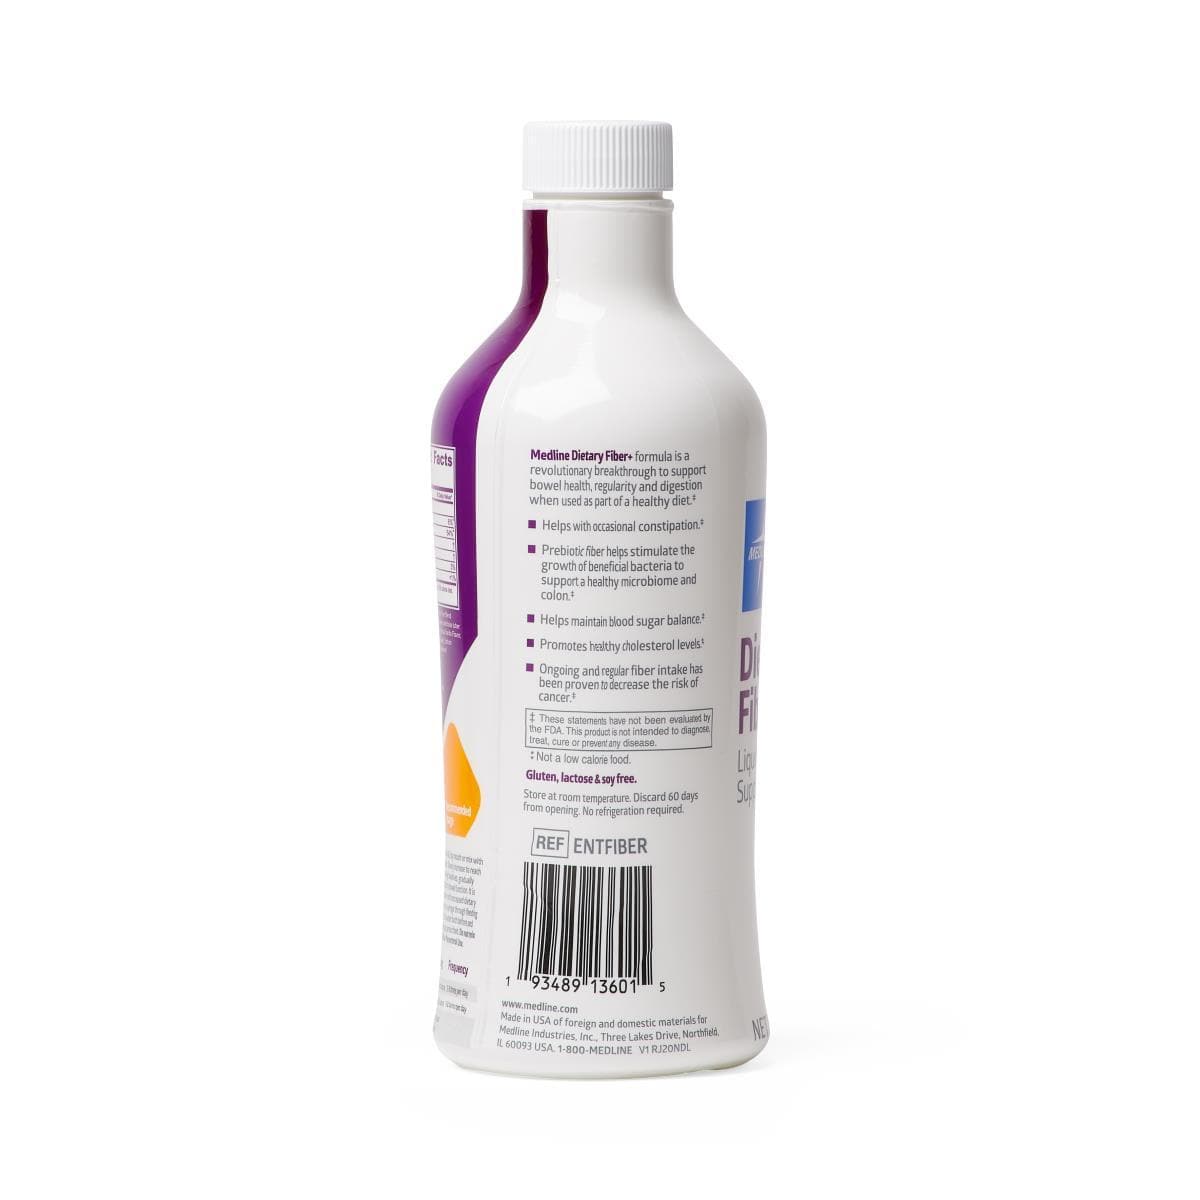 Medline Dietary Fiber+ Liquid Supplement - Vanilla - 32 oz Bottle - Senior.com Fiber Supplements